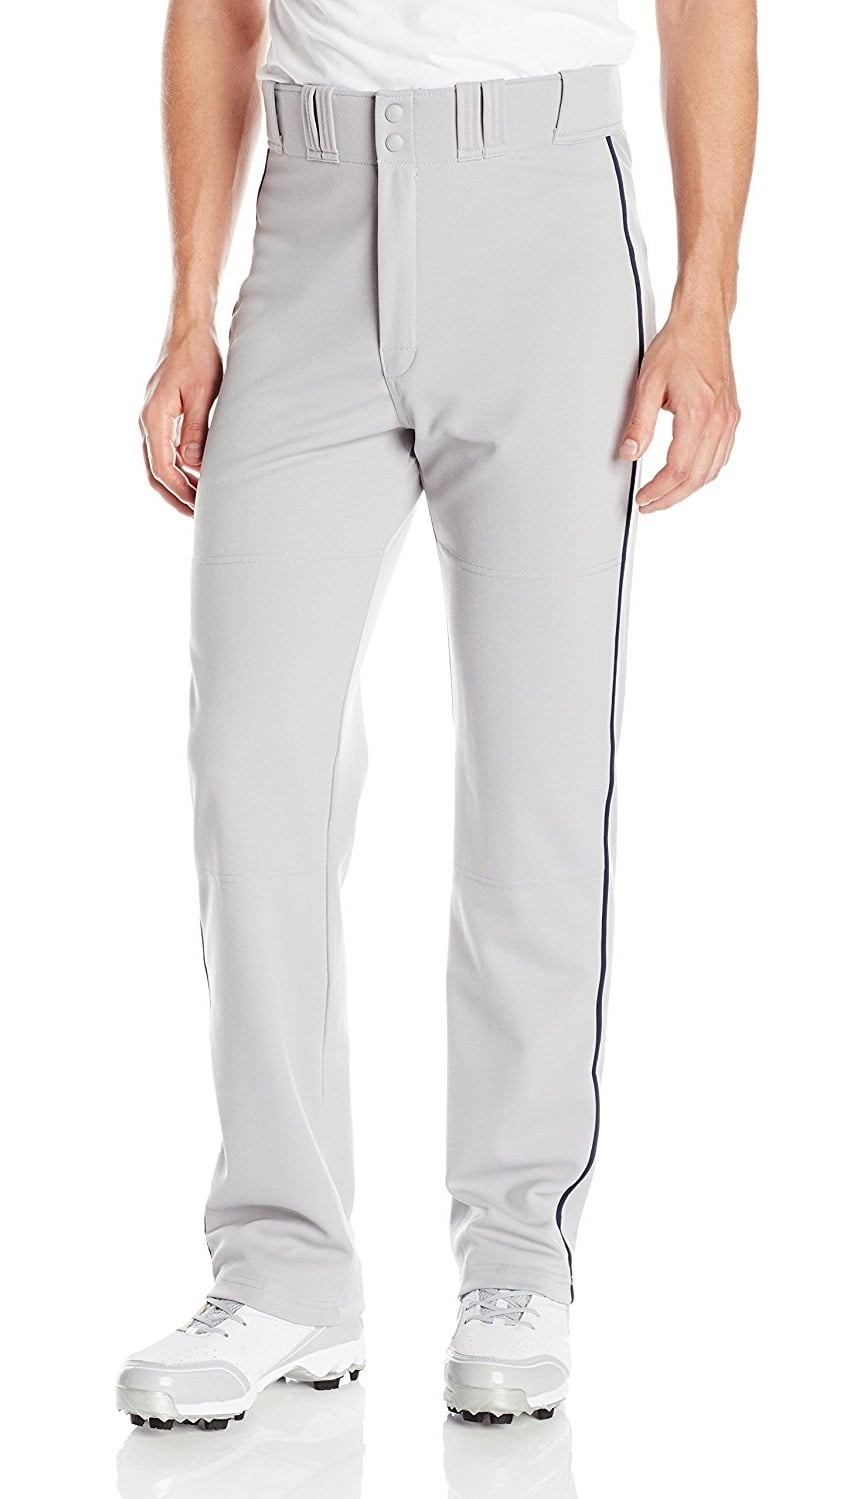 Long Piping Easton Mako 2 Adult Men's Piped Baseball Pants White & Grey 